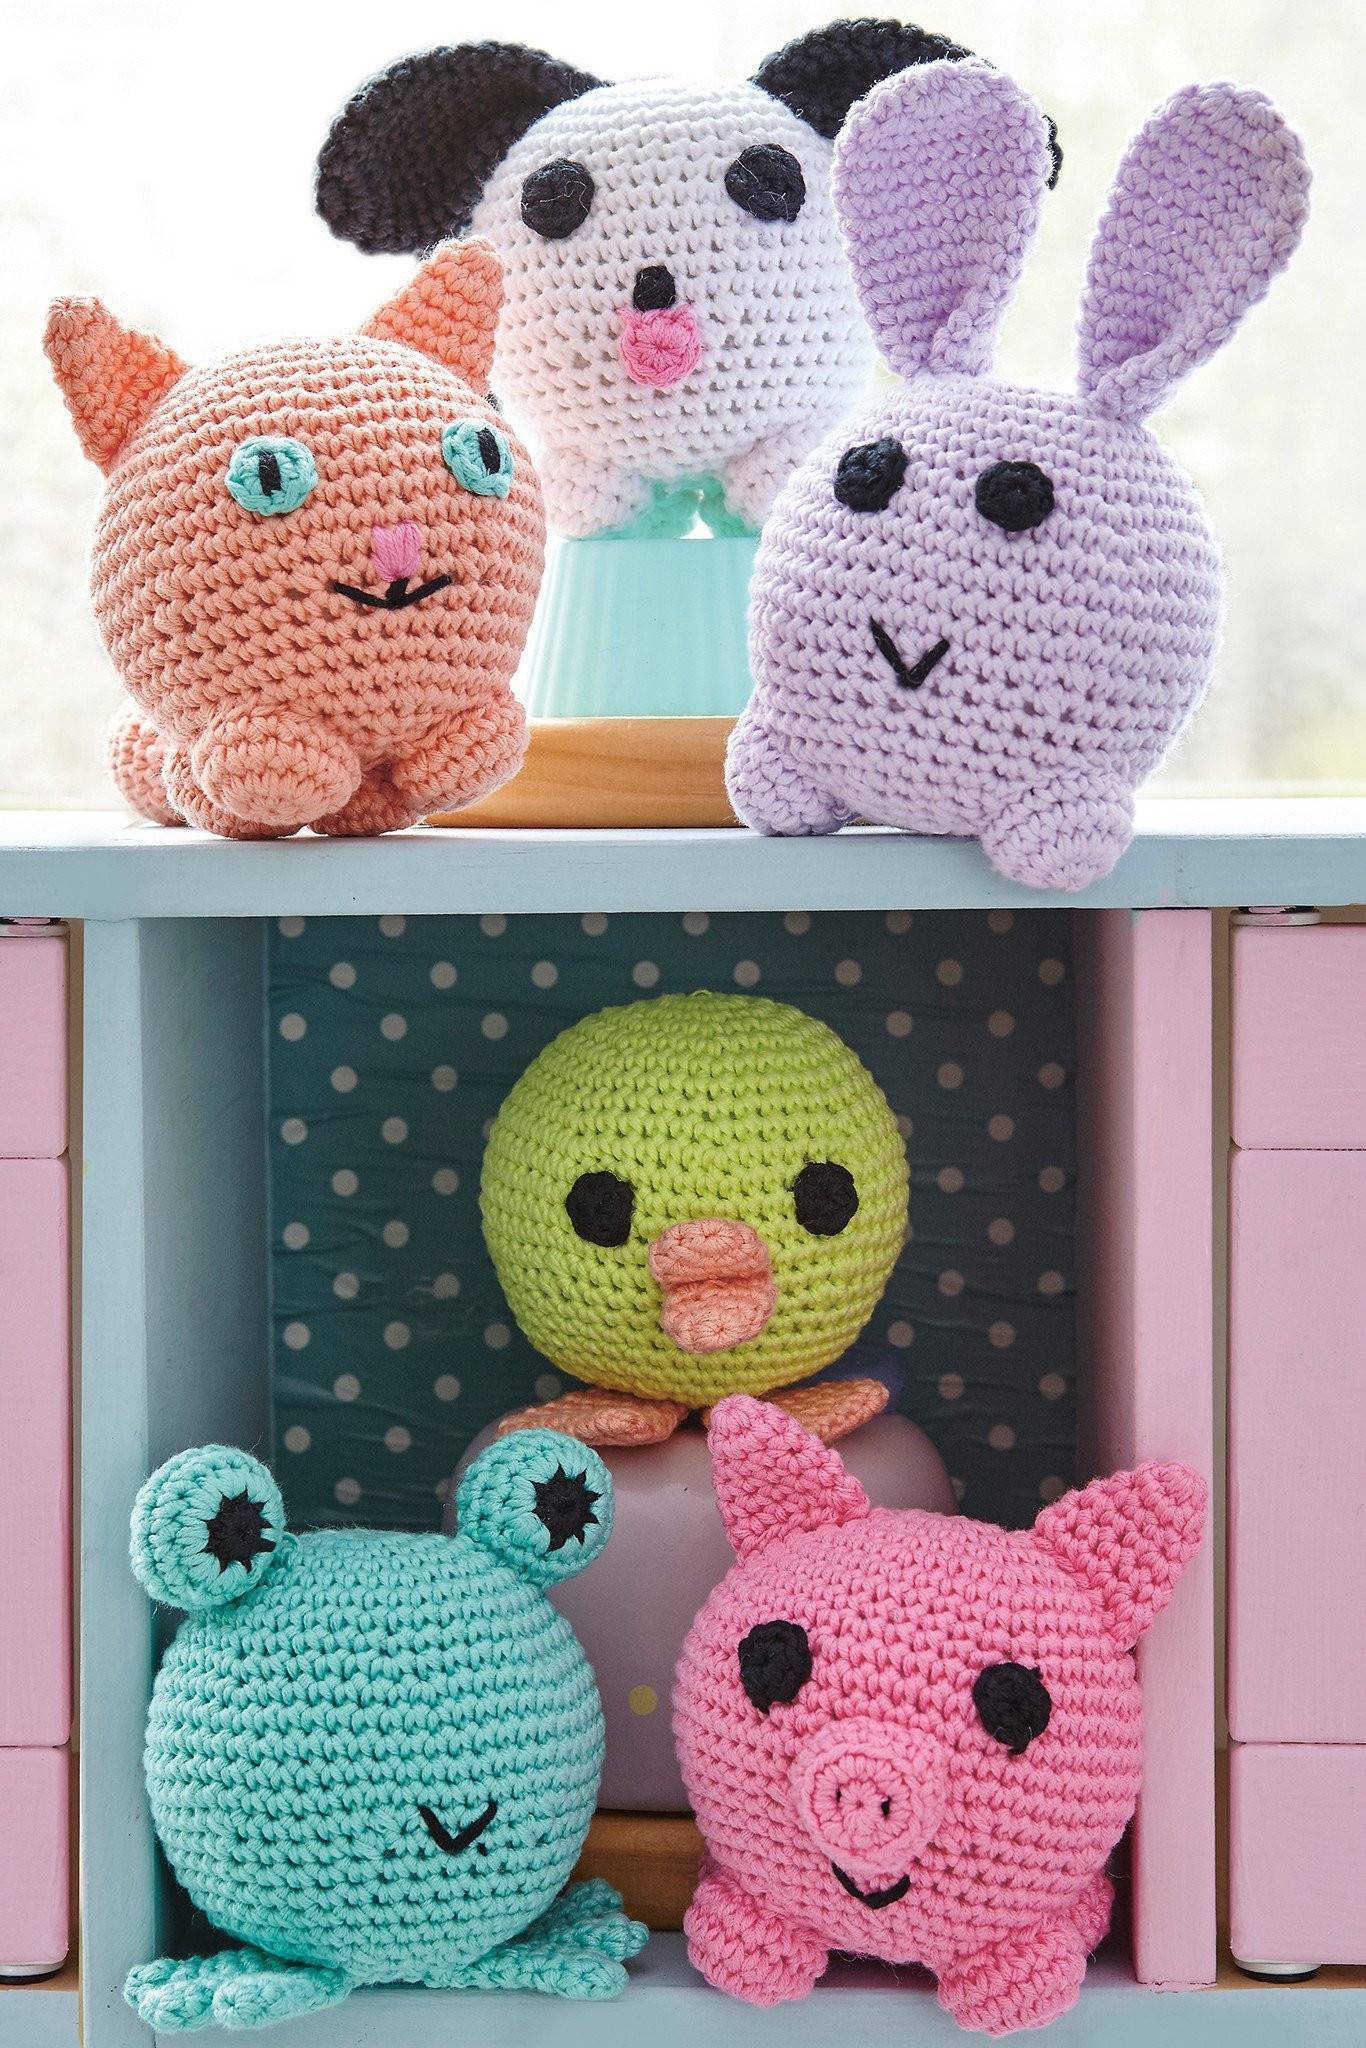 Amigurumi Animal Toy Crochet Pattern The Knitting Network